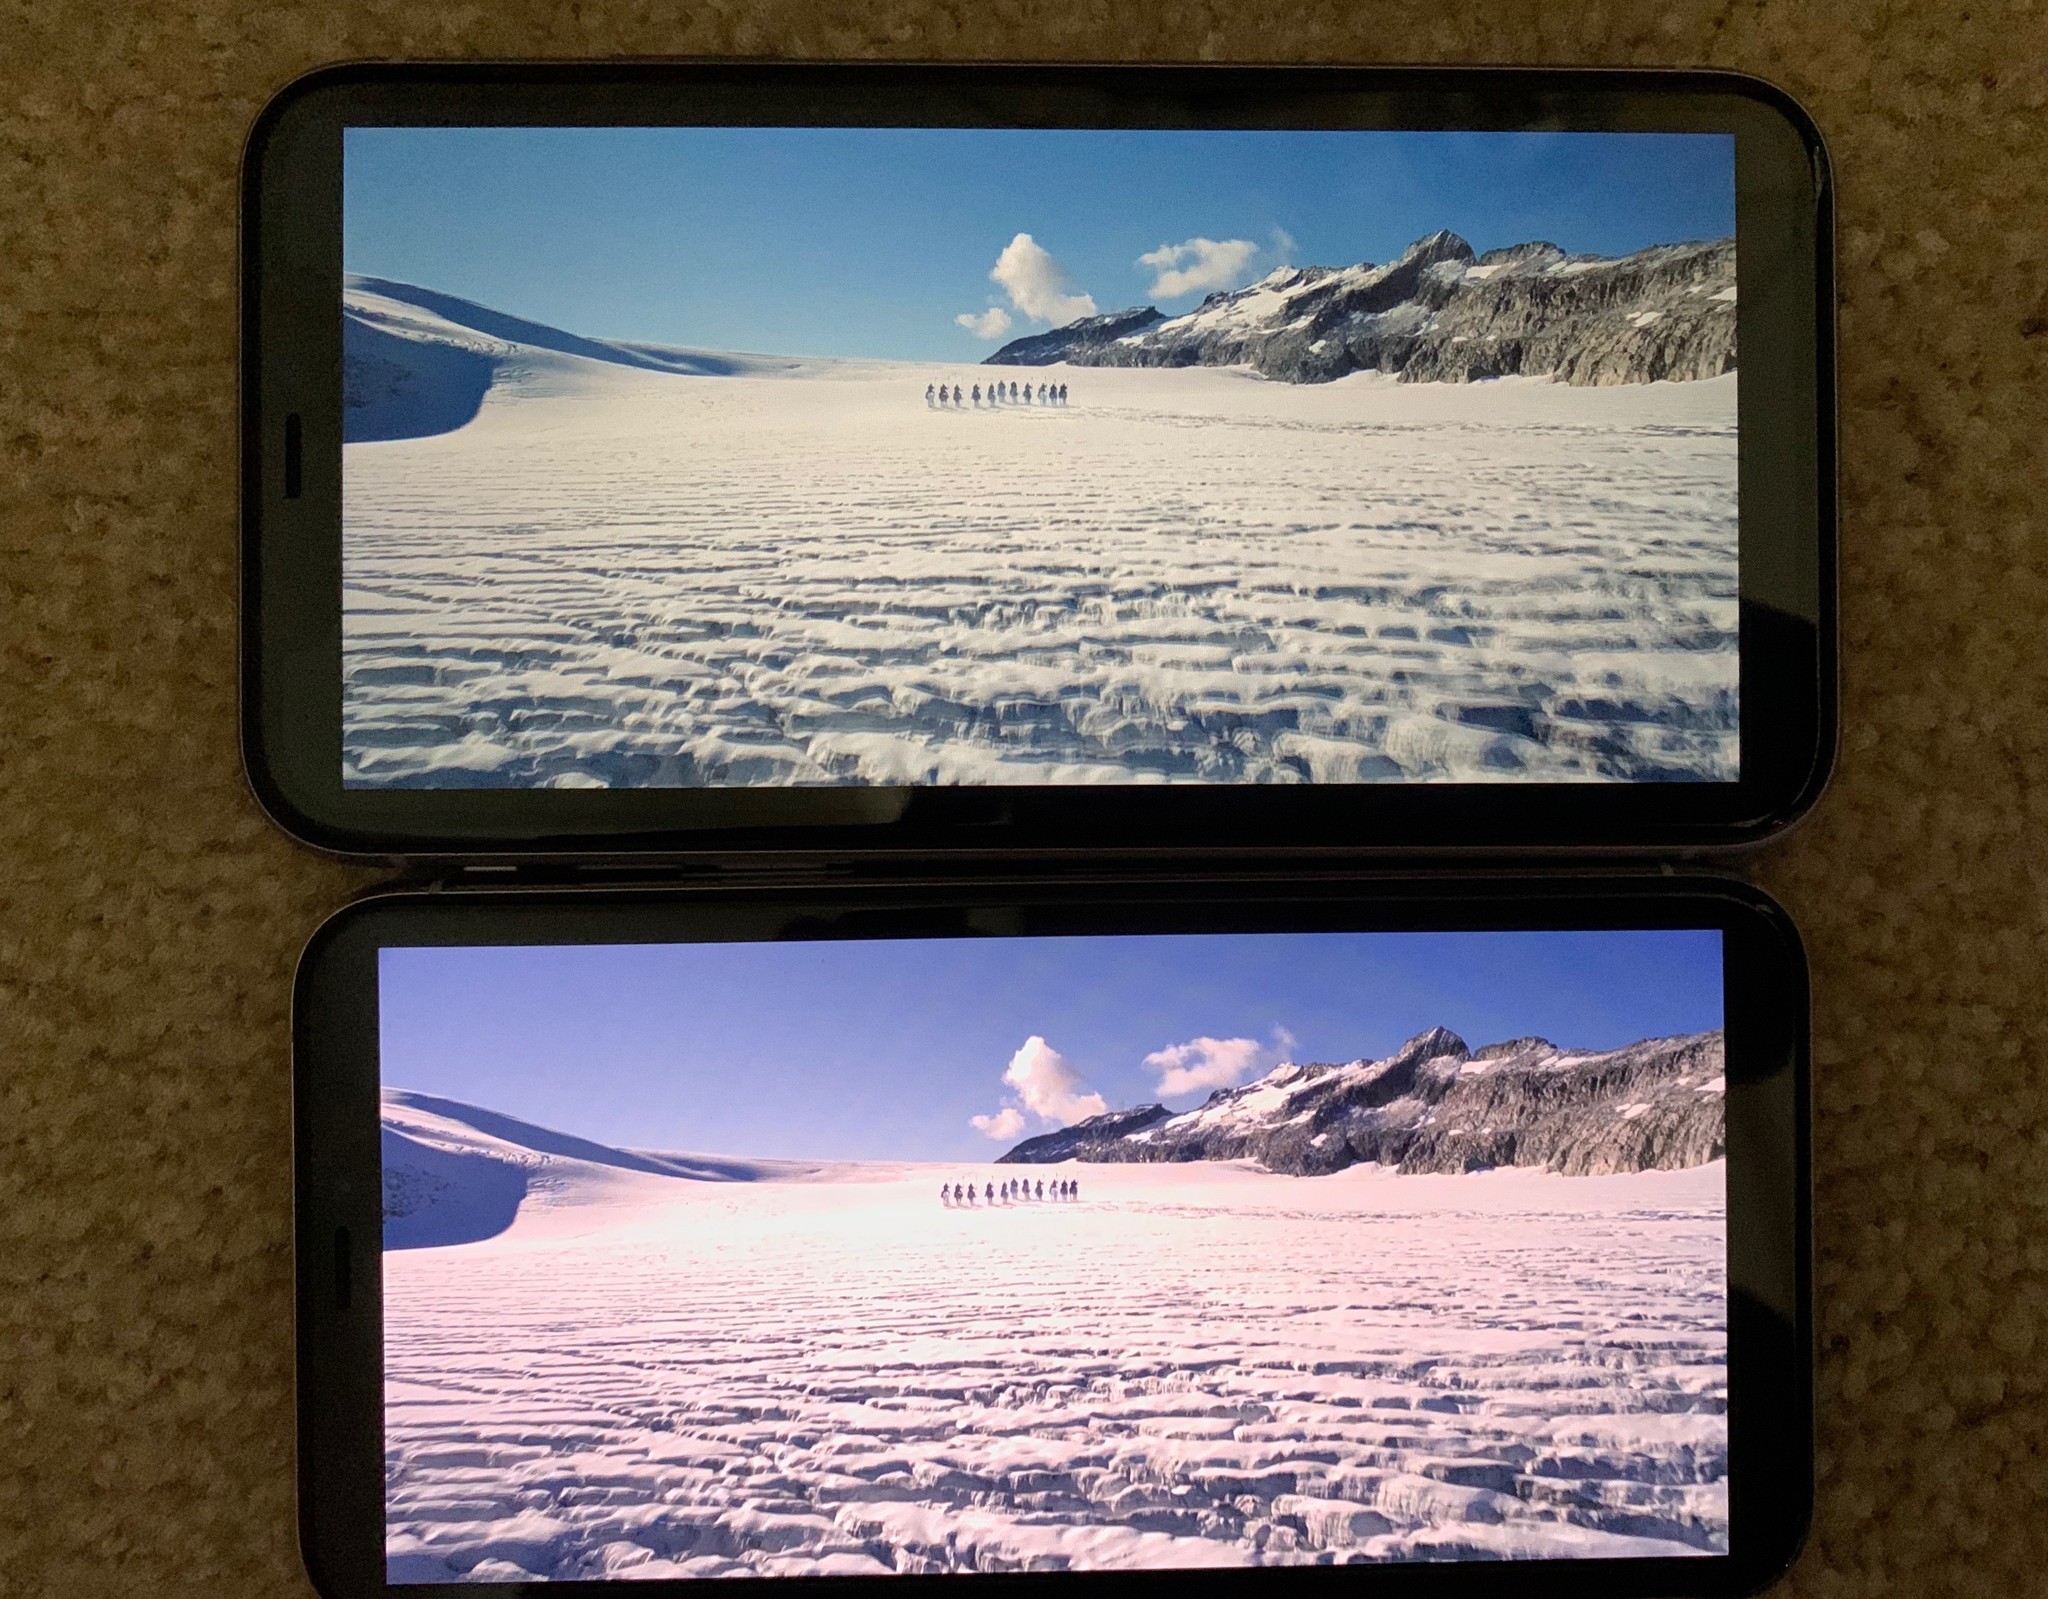 iPhone 11 vs iPhone 11 Pro display